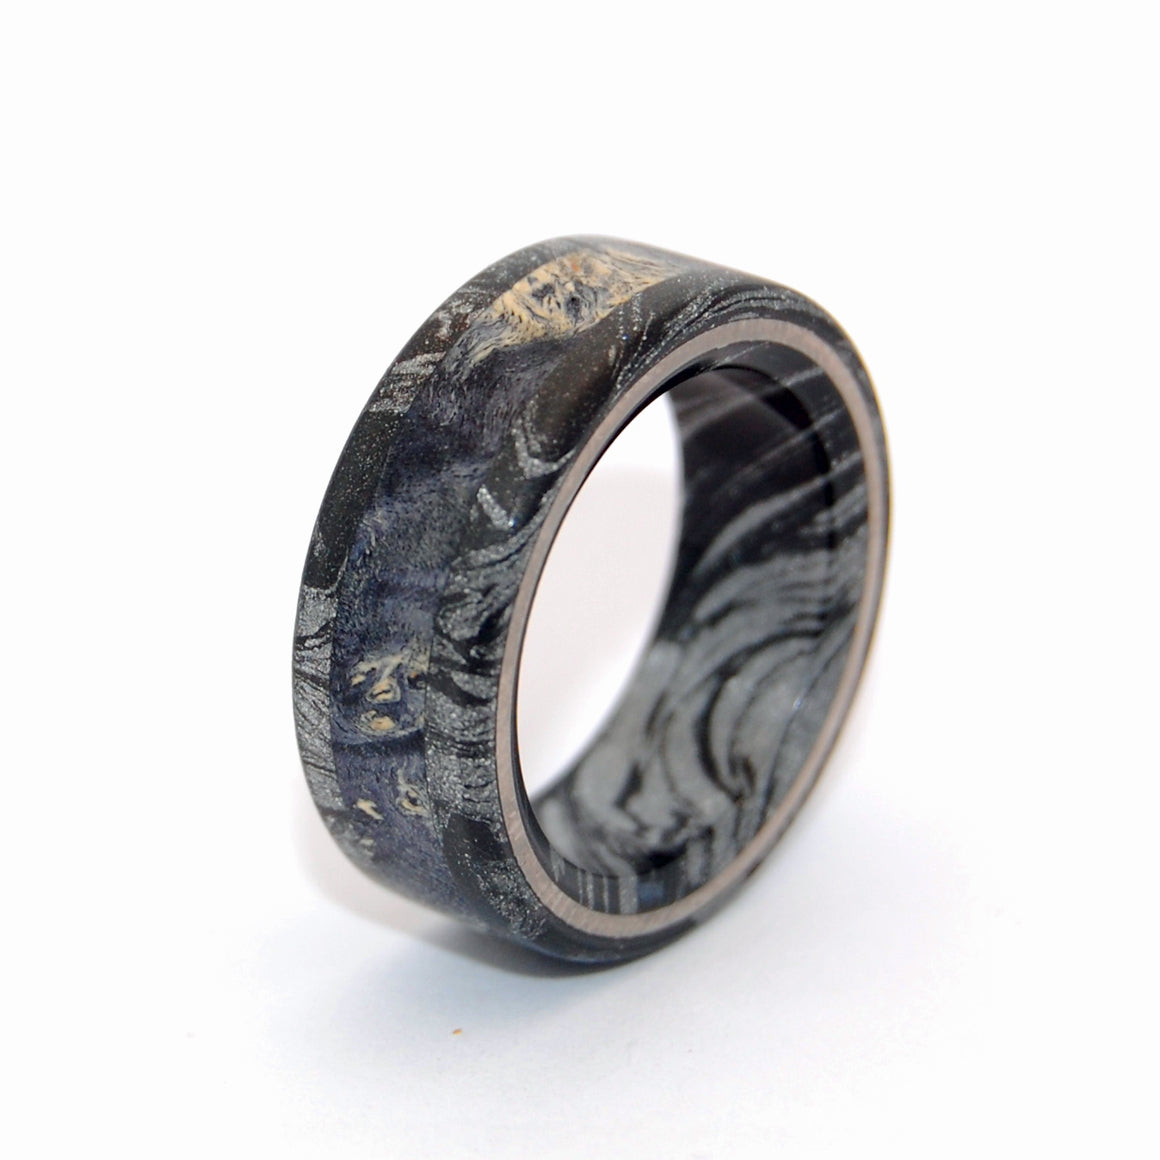 GREEK GOD DONS BLACK | Wood & M3 Black Titanium Wedding Rings - Minter and Richter Designs